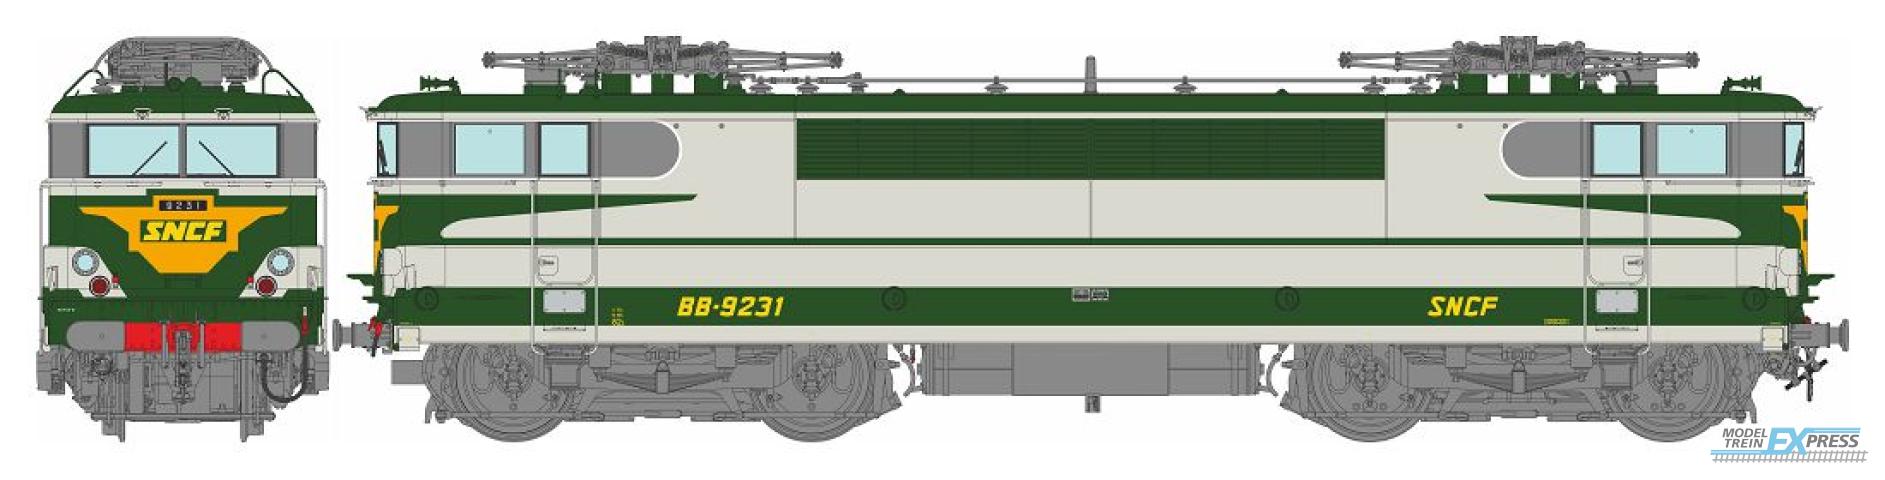 REE models MB-196S BB 9231 Green "ARZENS" BORDEAUX Era IV-V - DCC Sound Functional Pantos